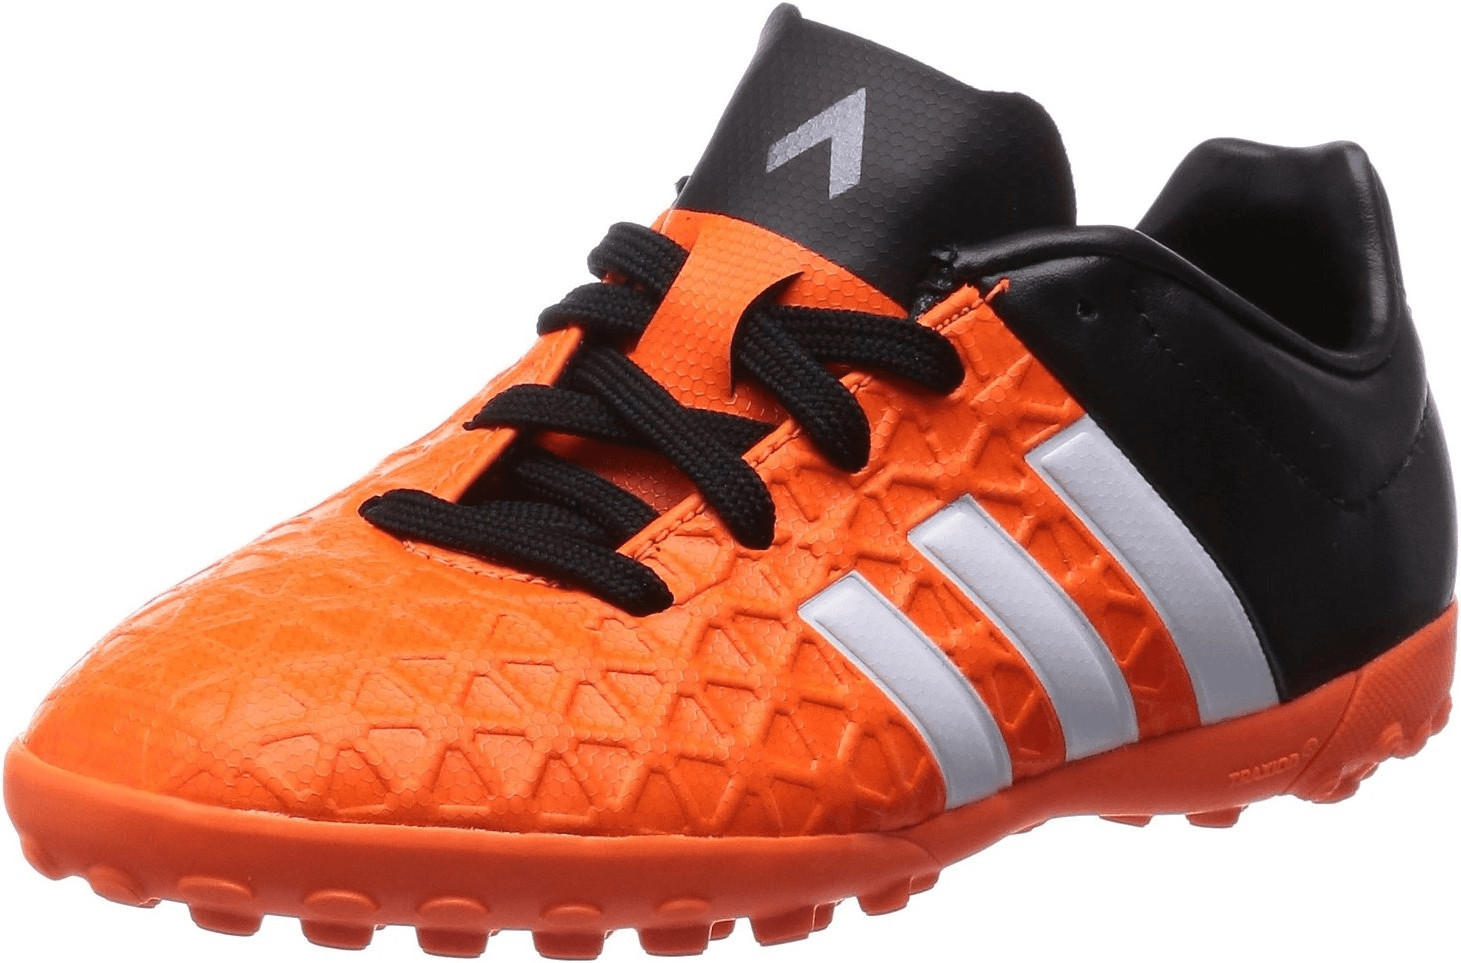 Adidas Ace 15.4 TF Men solar orange/white/core black